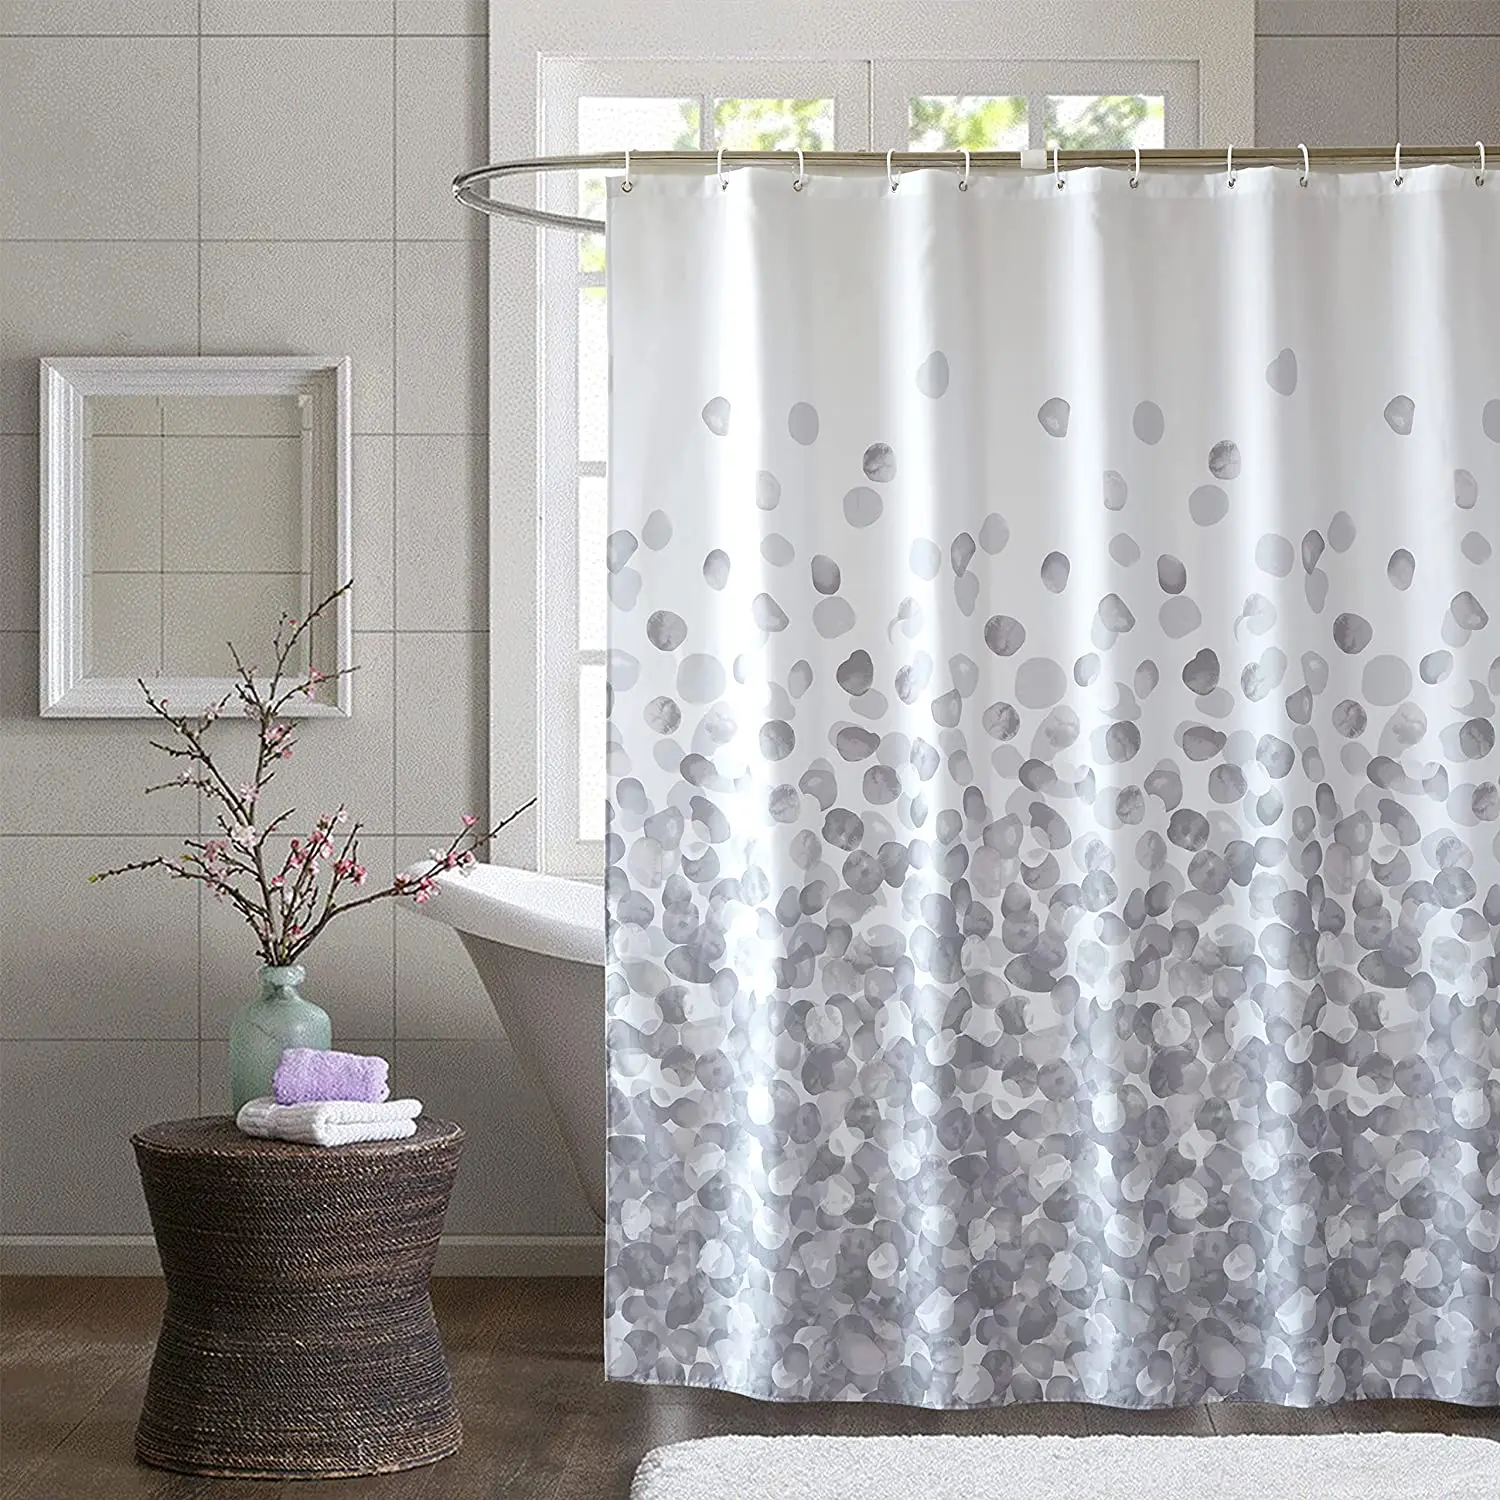 Shower Curtain Liner Floral Bird Butterfly Print Fabric Shower Curtain For Bathtub Bathroom Decor Waterproof Bath Curtain